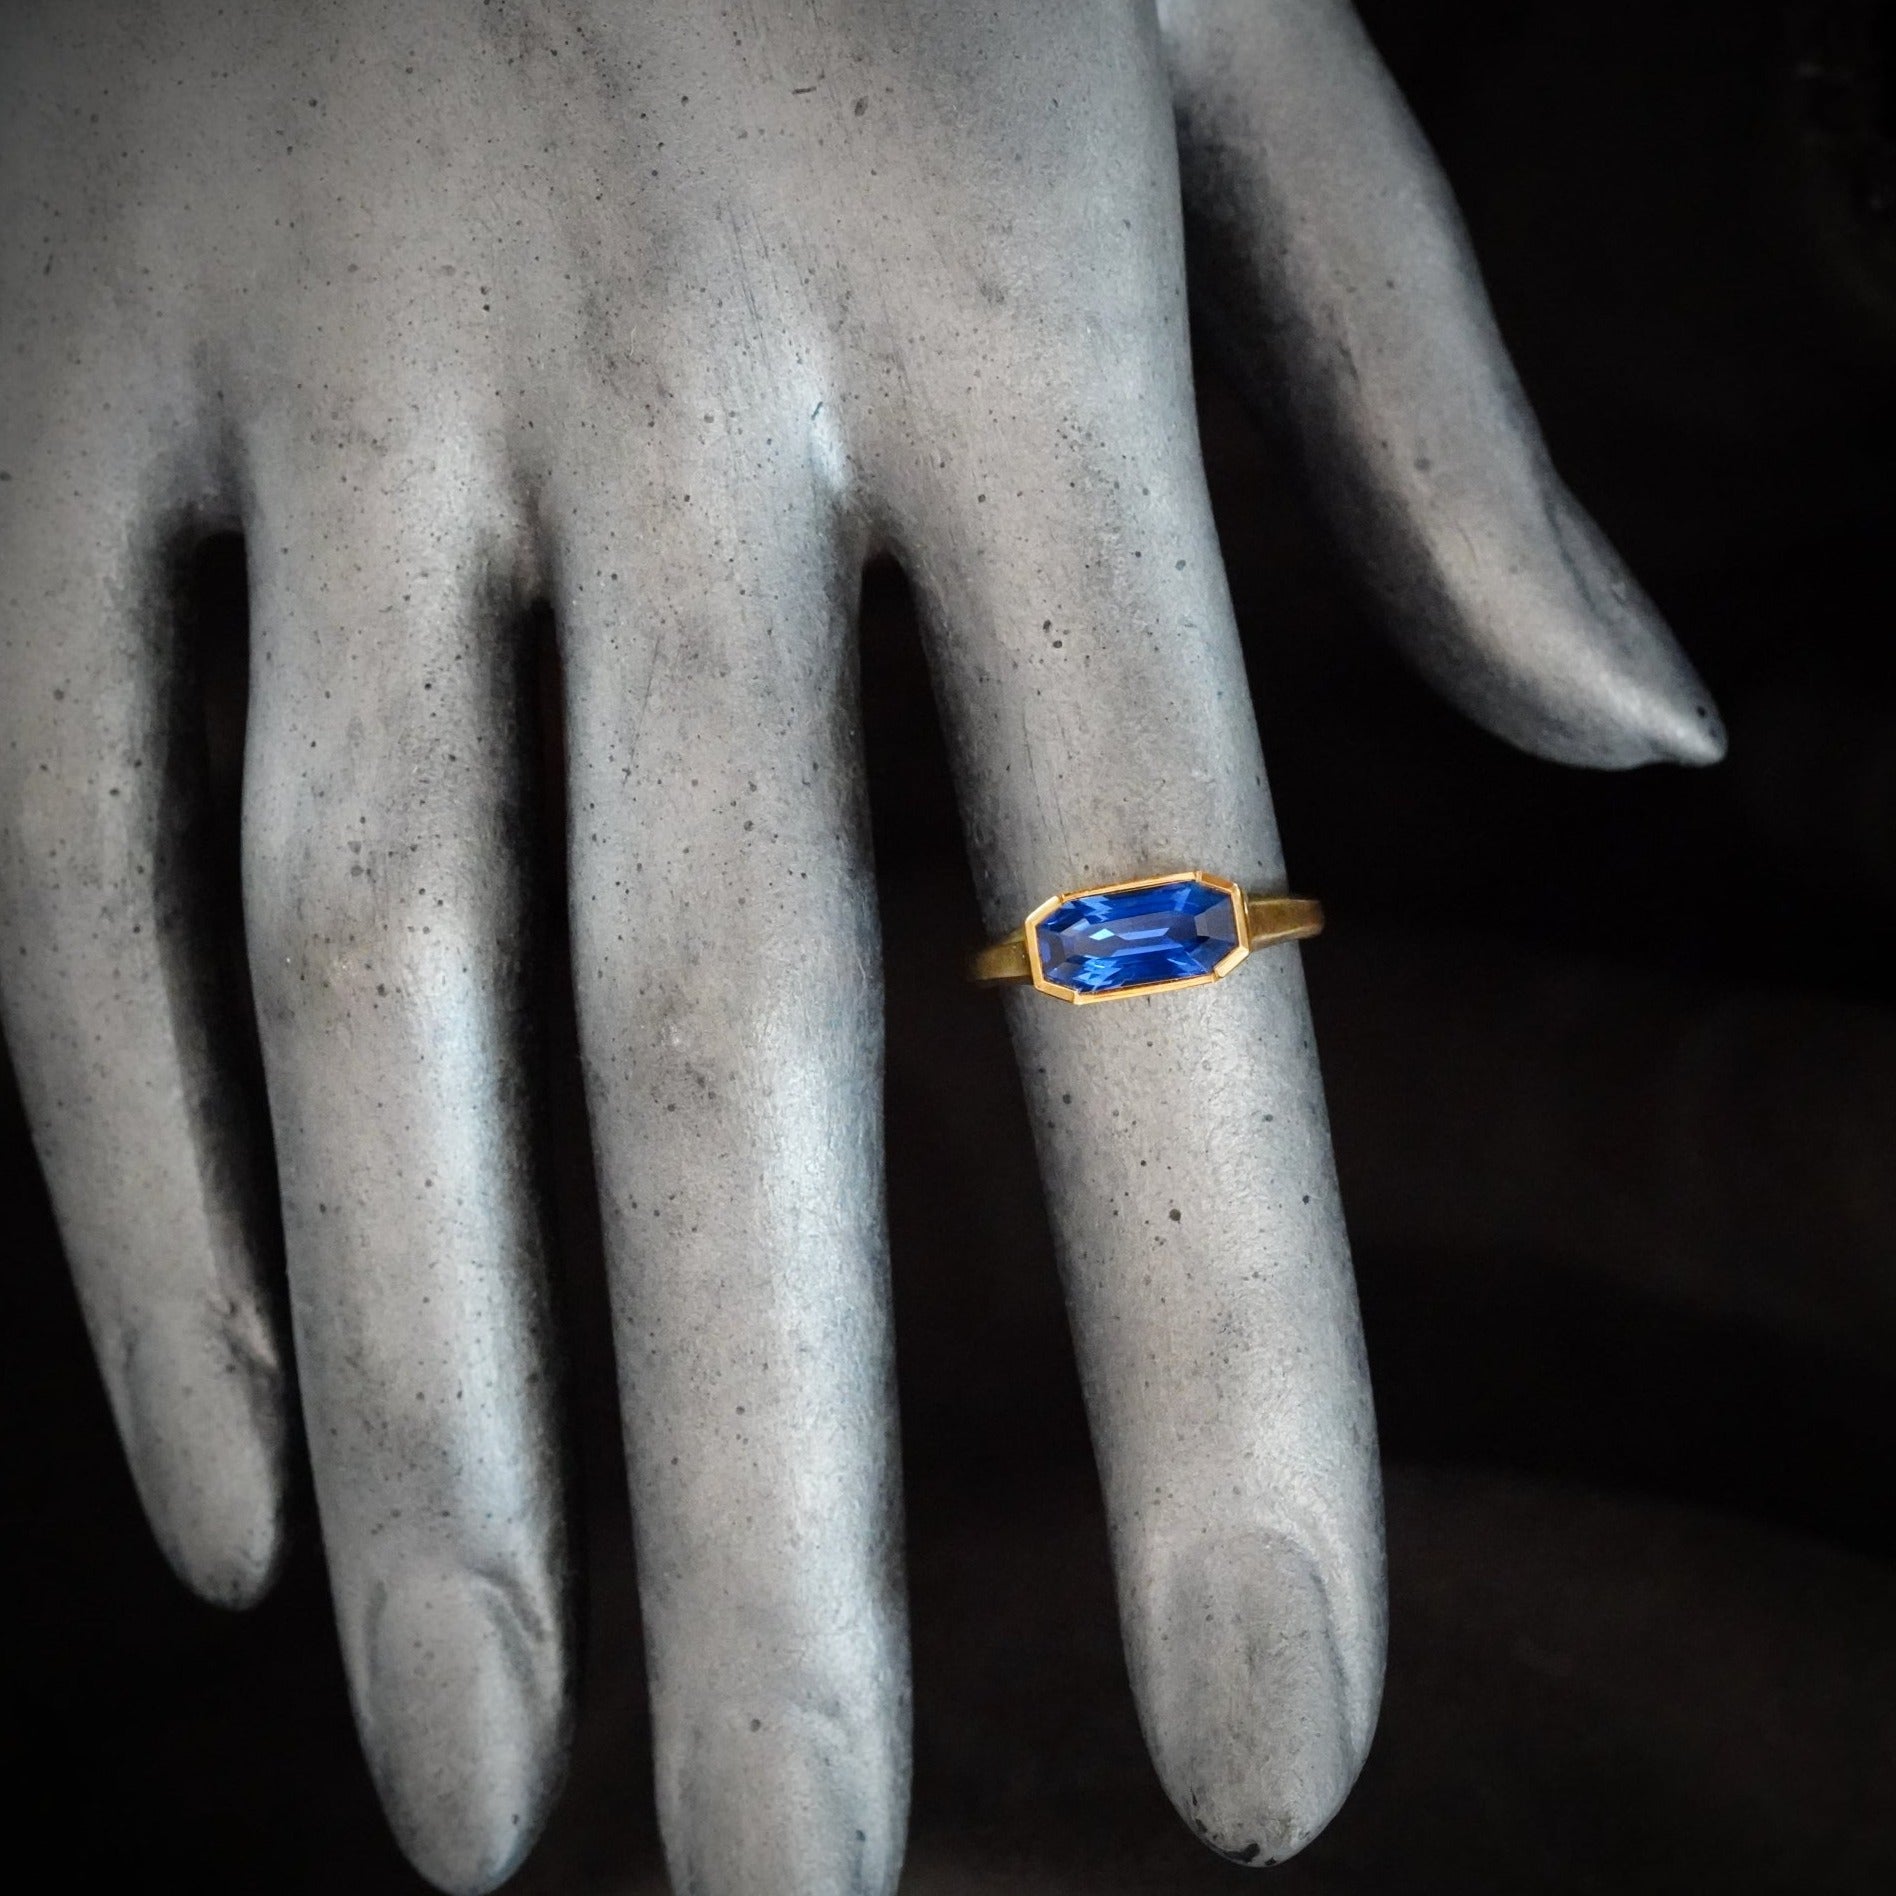 Anup Jogani 2.15 ct Ceylon Sapphire Gold Ring - A Royal Blue Gemstone